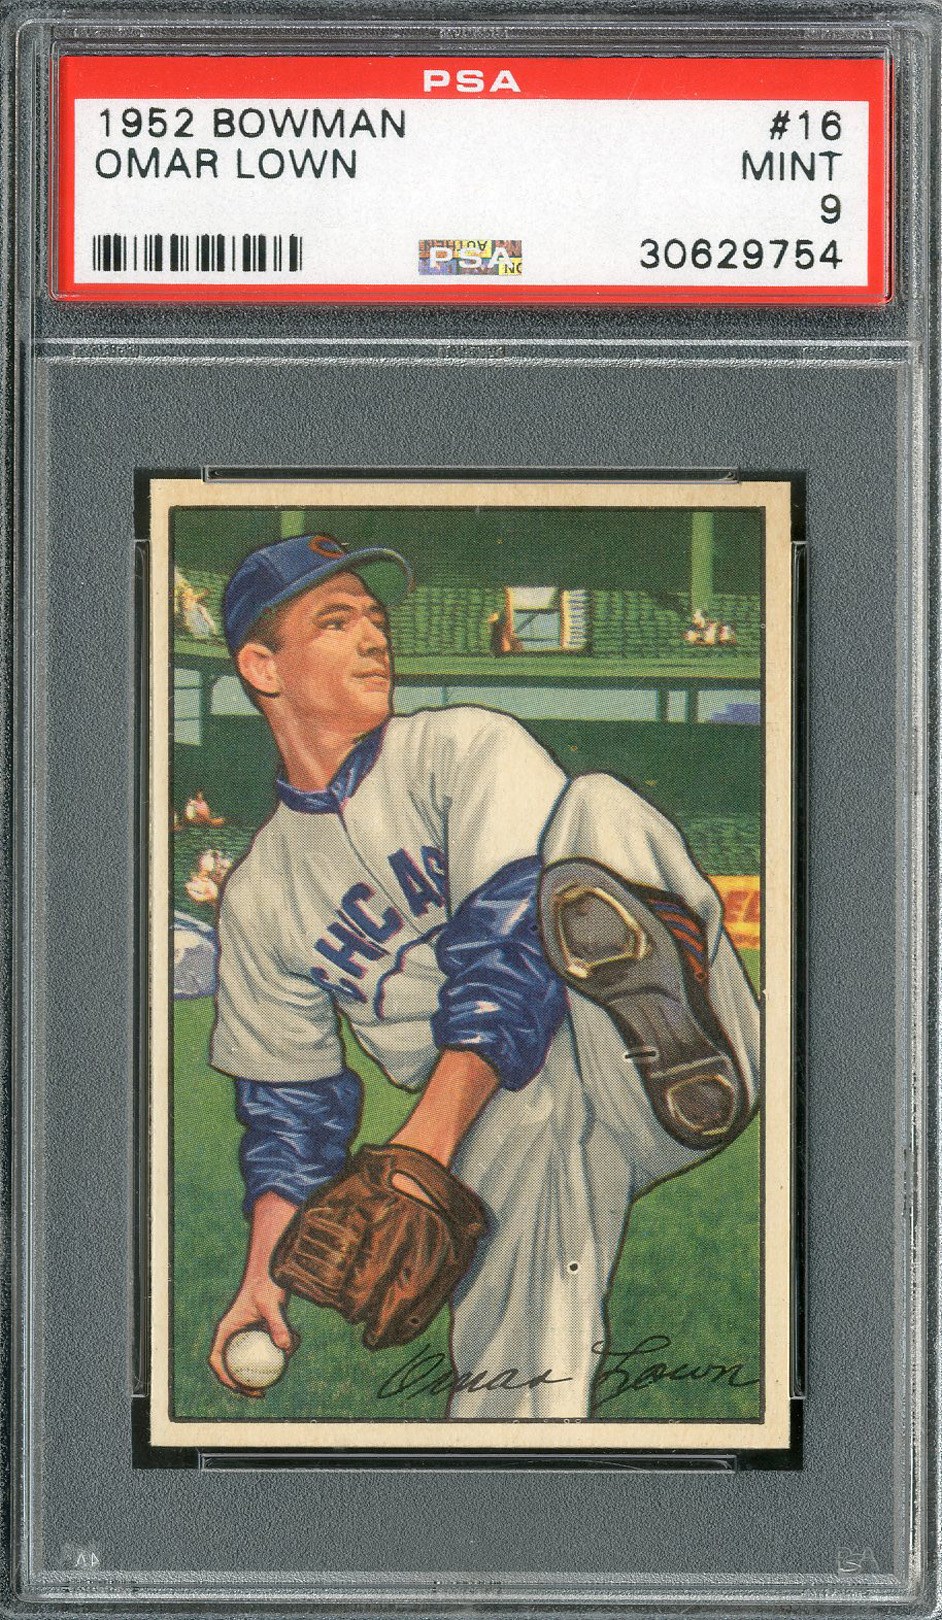 Baseball and Trading Cards - 1952 Bowman #16 Omar Lown PSA MINT 9